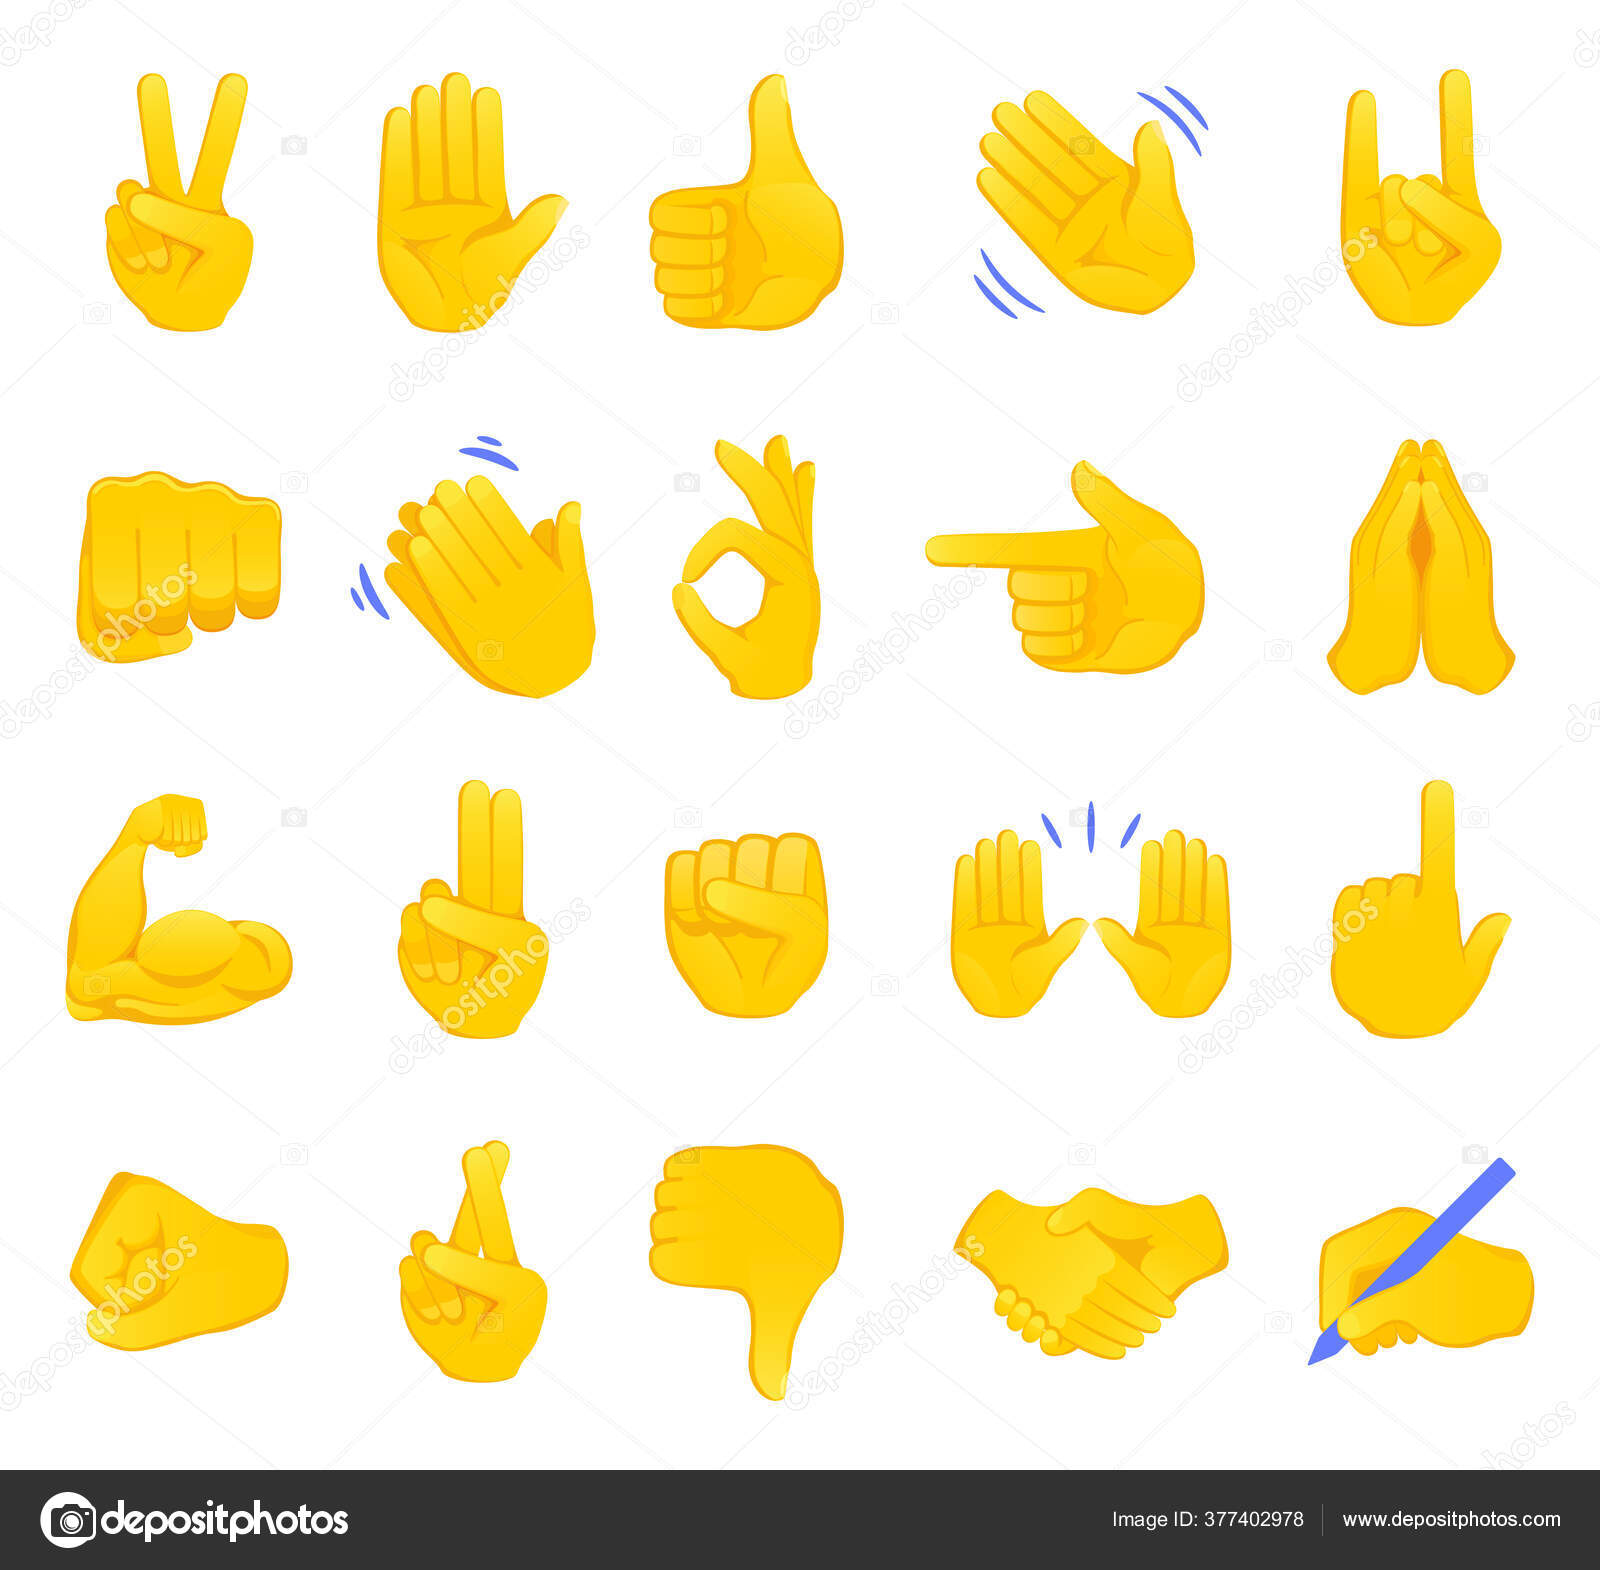 Hand Gesture Emojis Icons Collection Handshake Biceps Applause